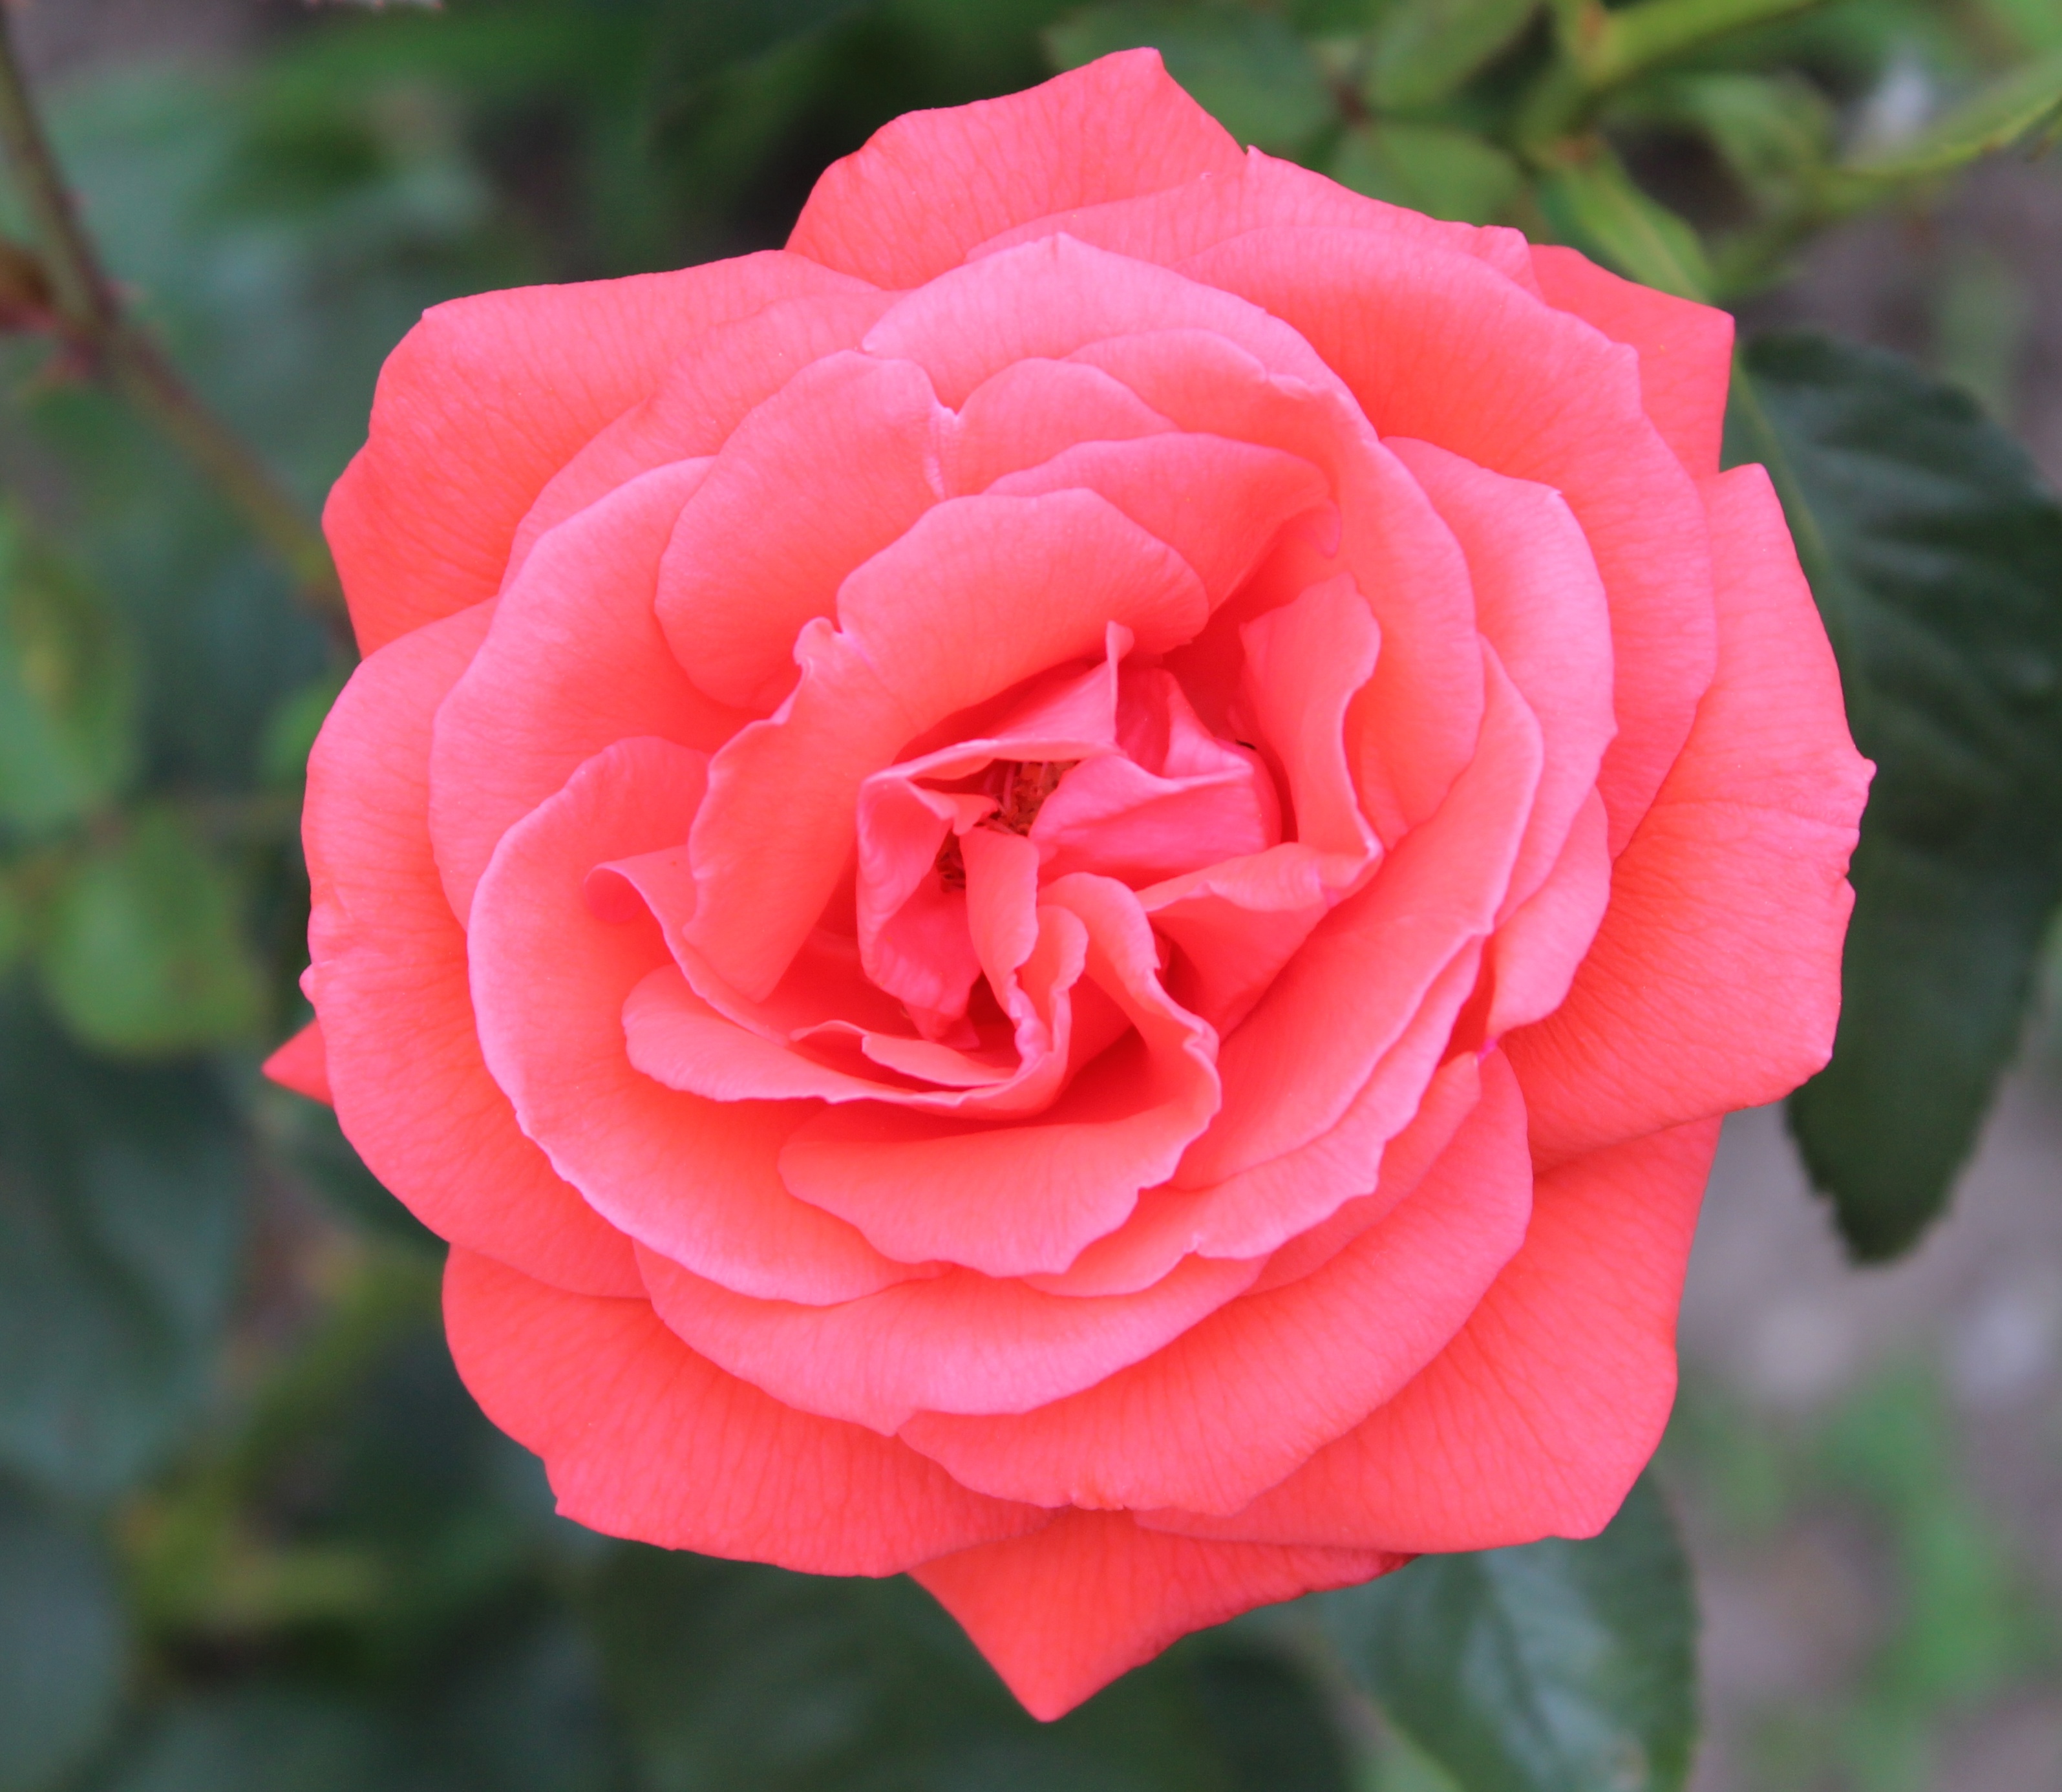 File:Rose Super Star.jpg - Wikimedia Commons